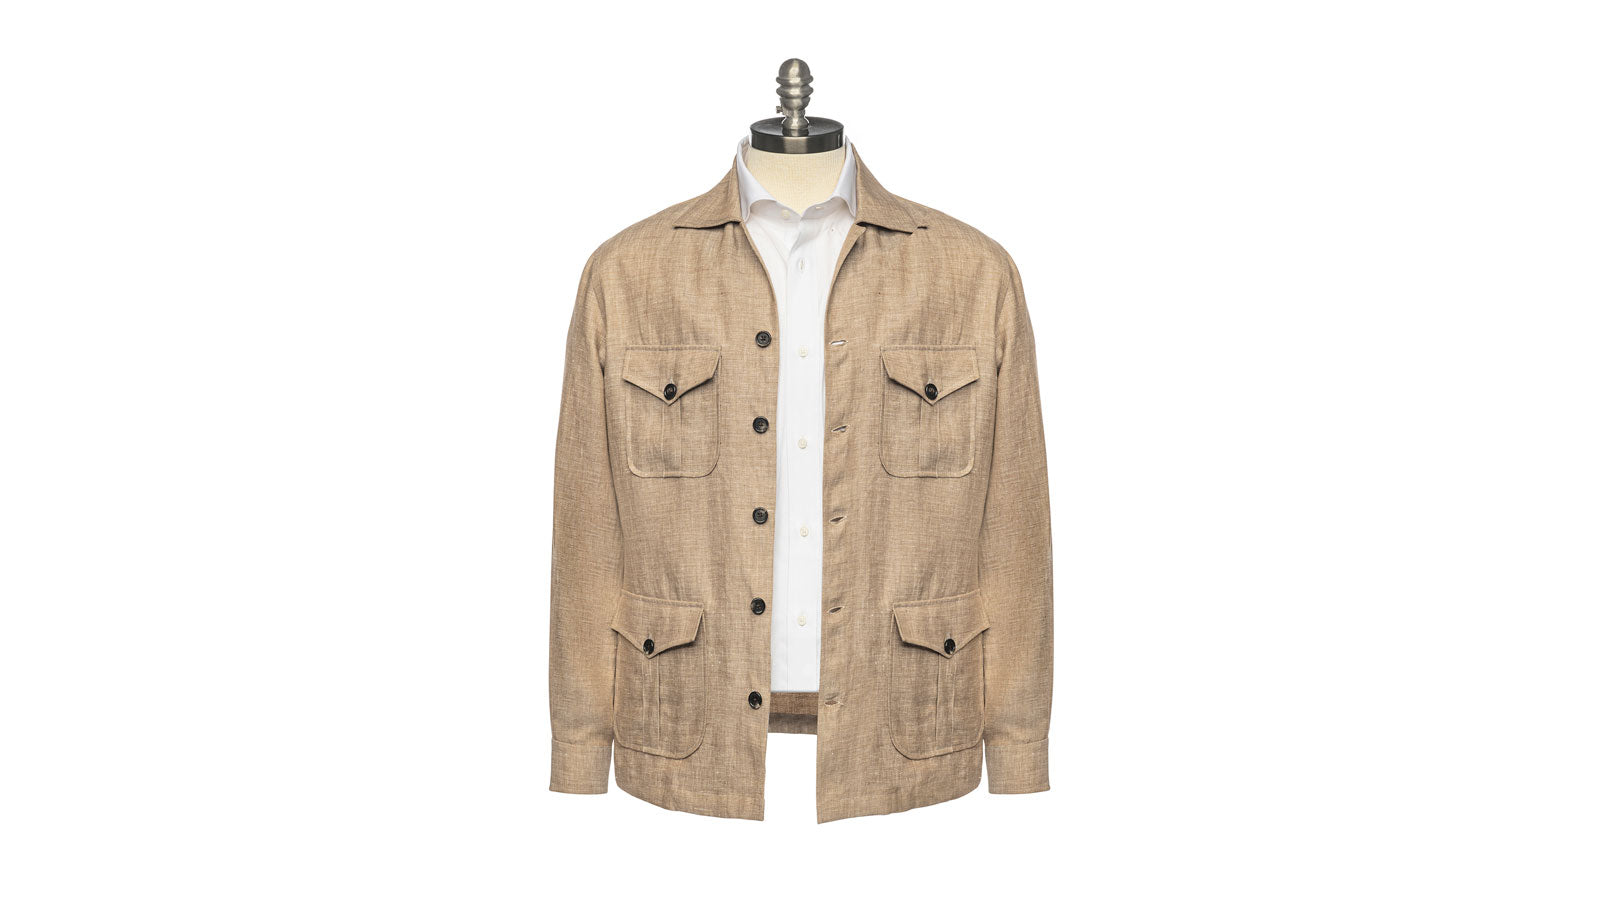 Summer Linen Overshirt vs. Field Jacket: The Quintessential Pieces for Classic Sartorial Menswear